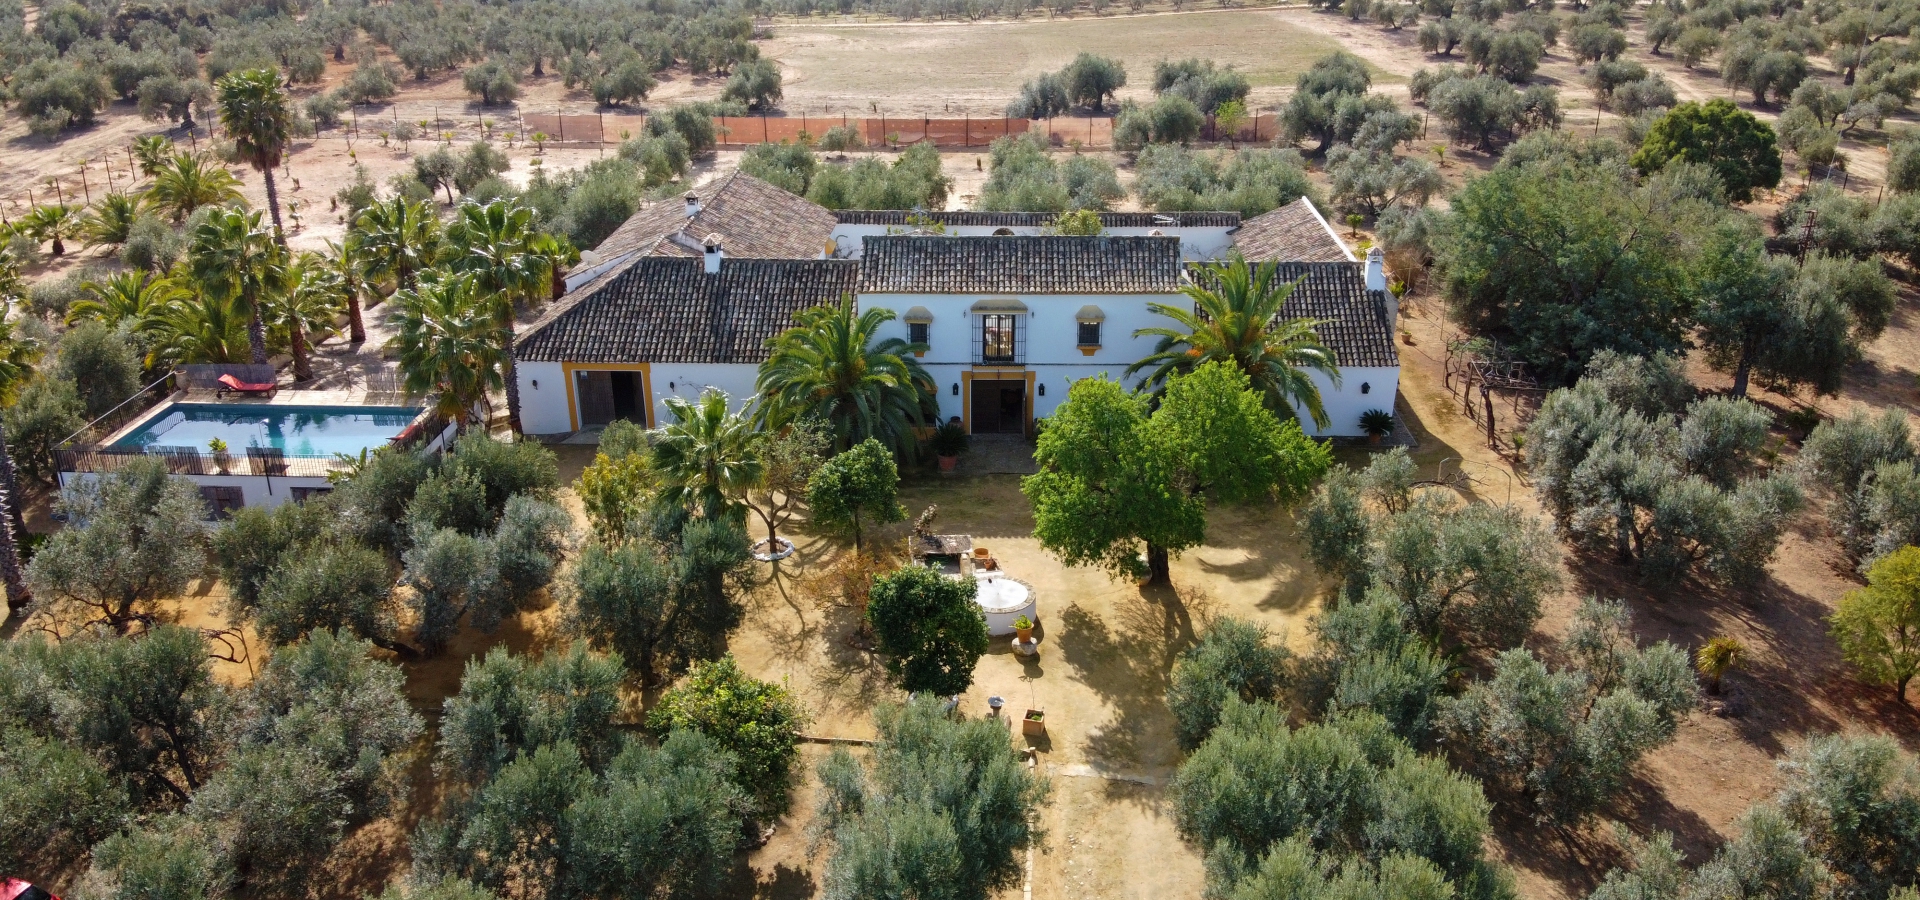 Country houses for sale in Seville - Fincas Rústicas Buhaira